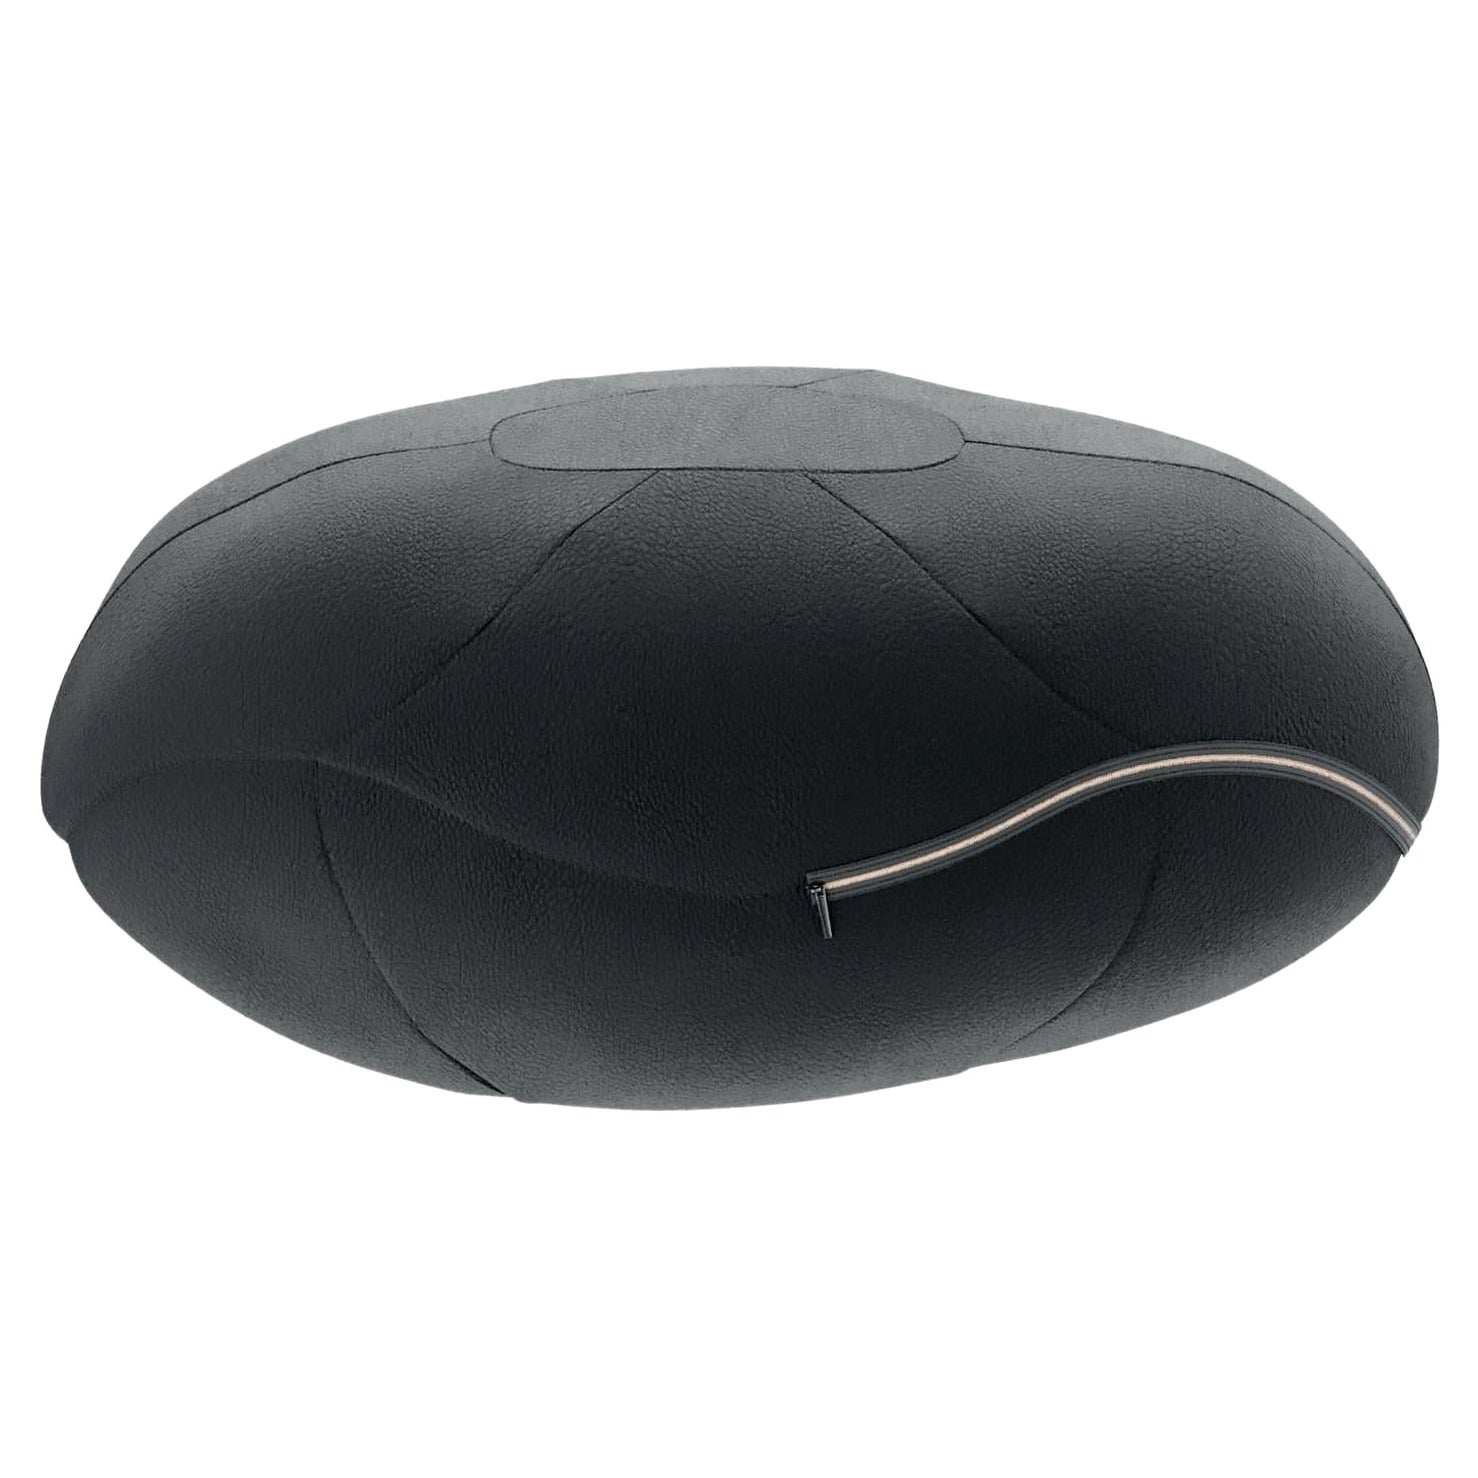 Slate Stone Black Large Floor Cushion, for Kid's Playroom or Pet's Comfort